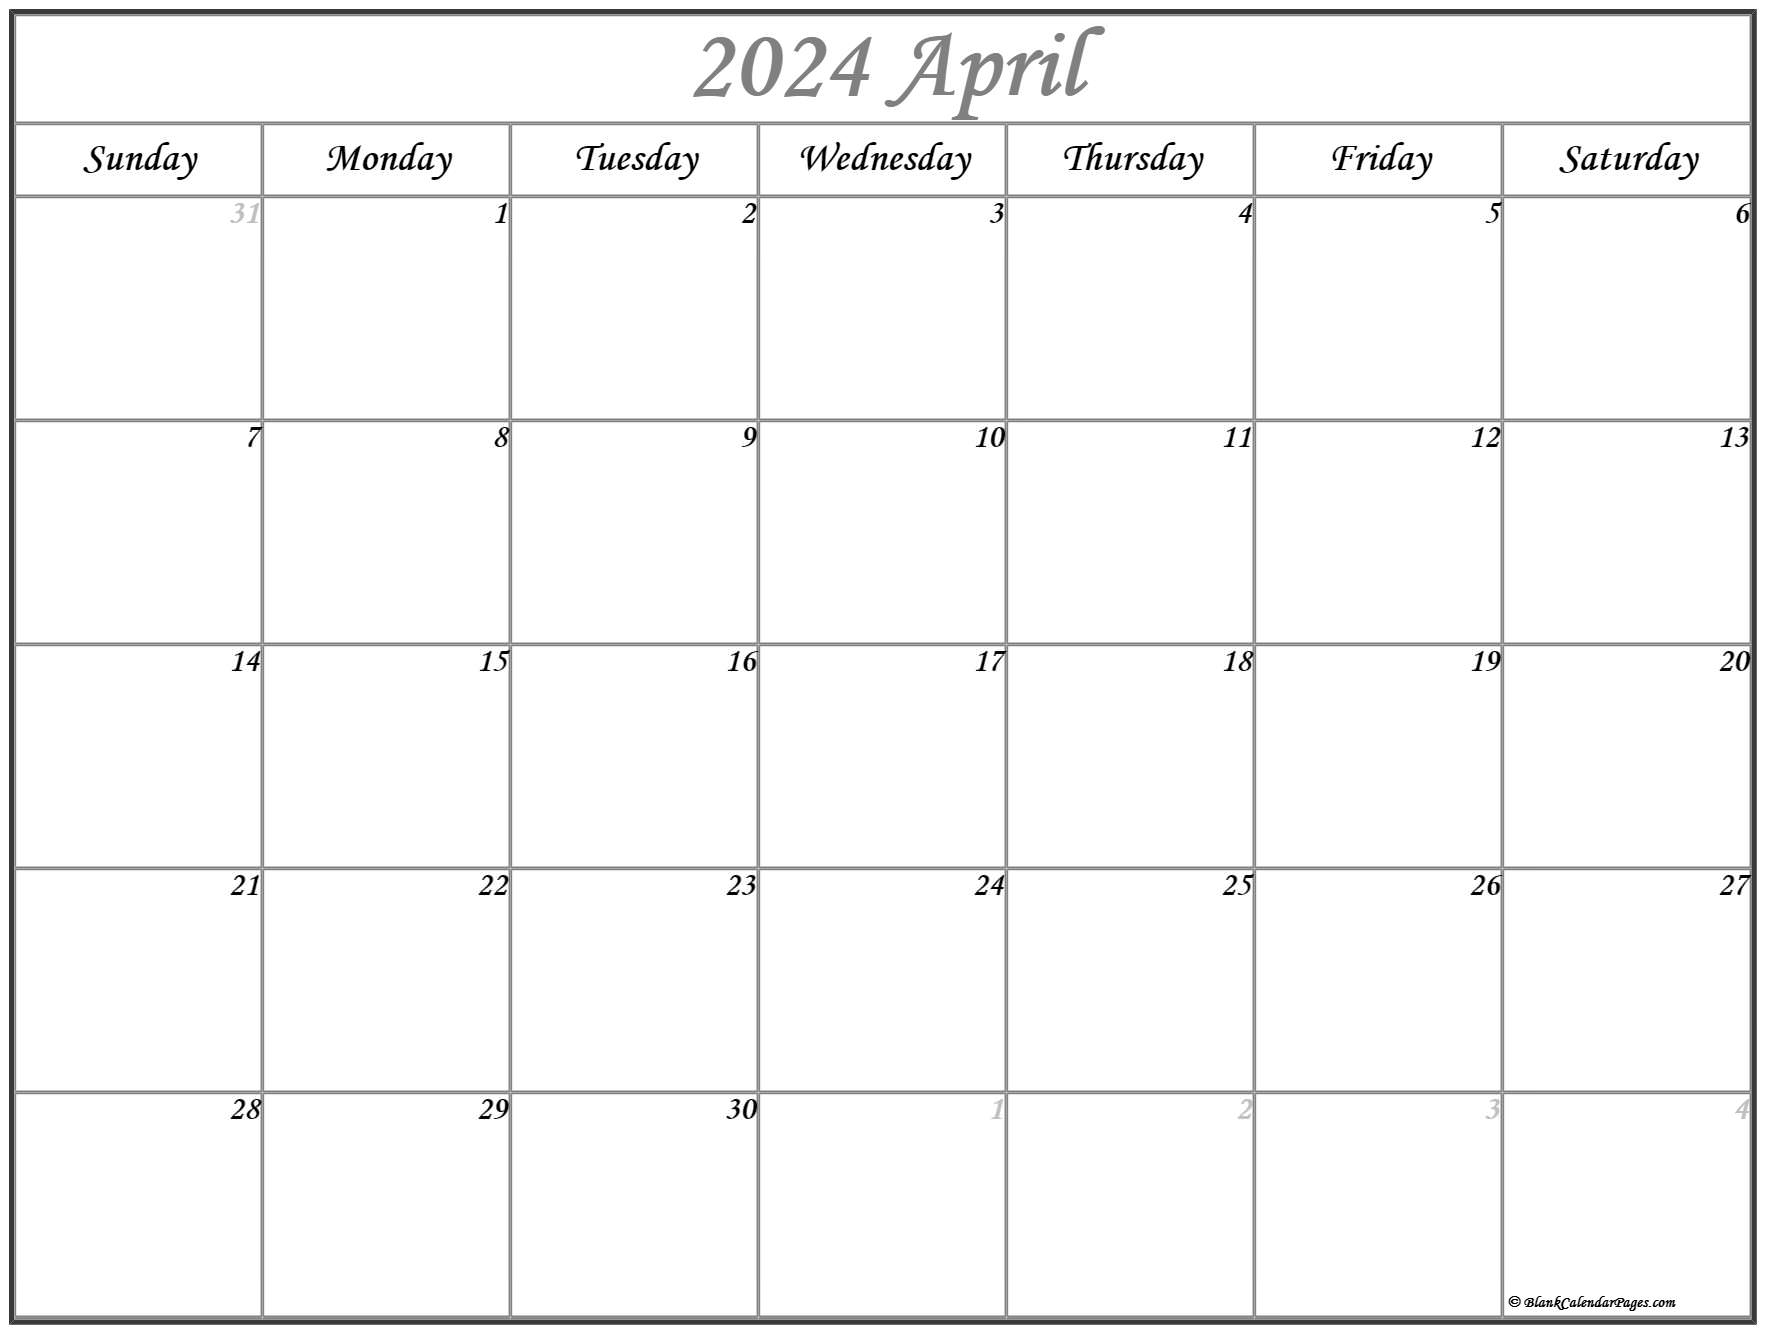 April Printable Calendar 2024 Free 2024 Calendar Template